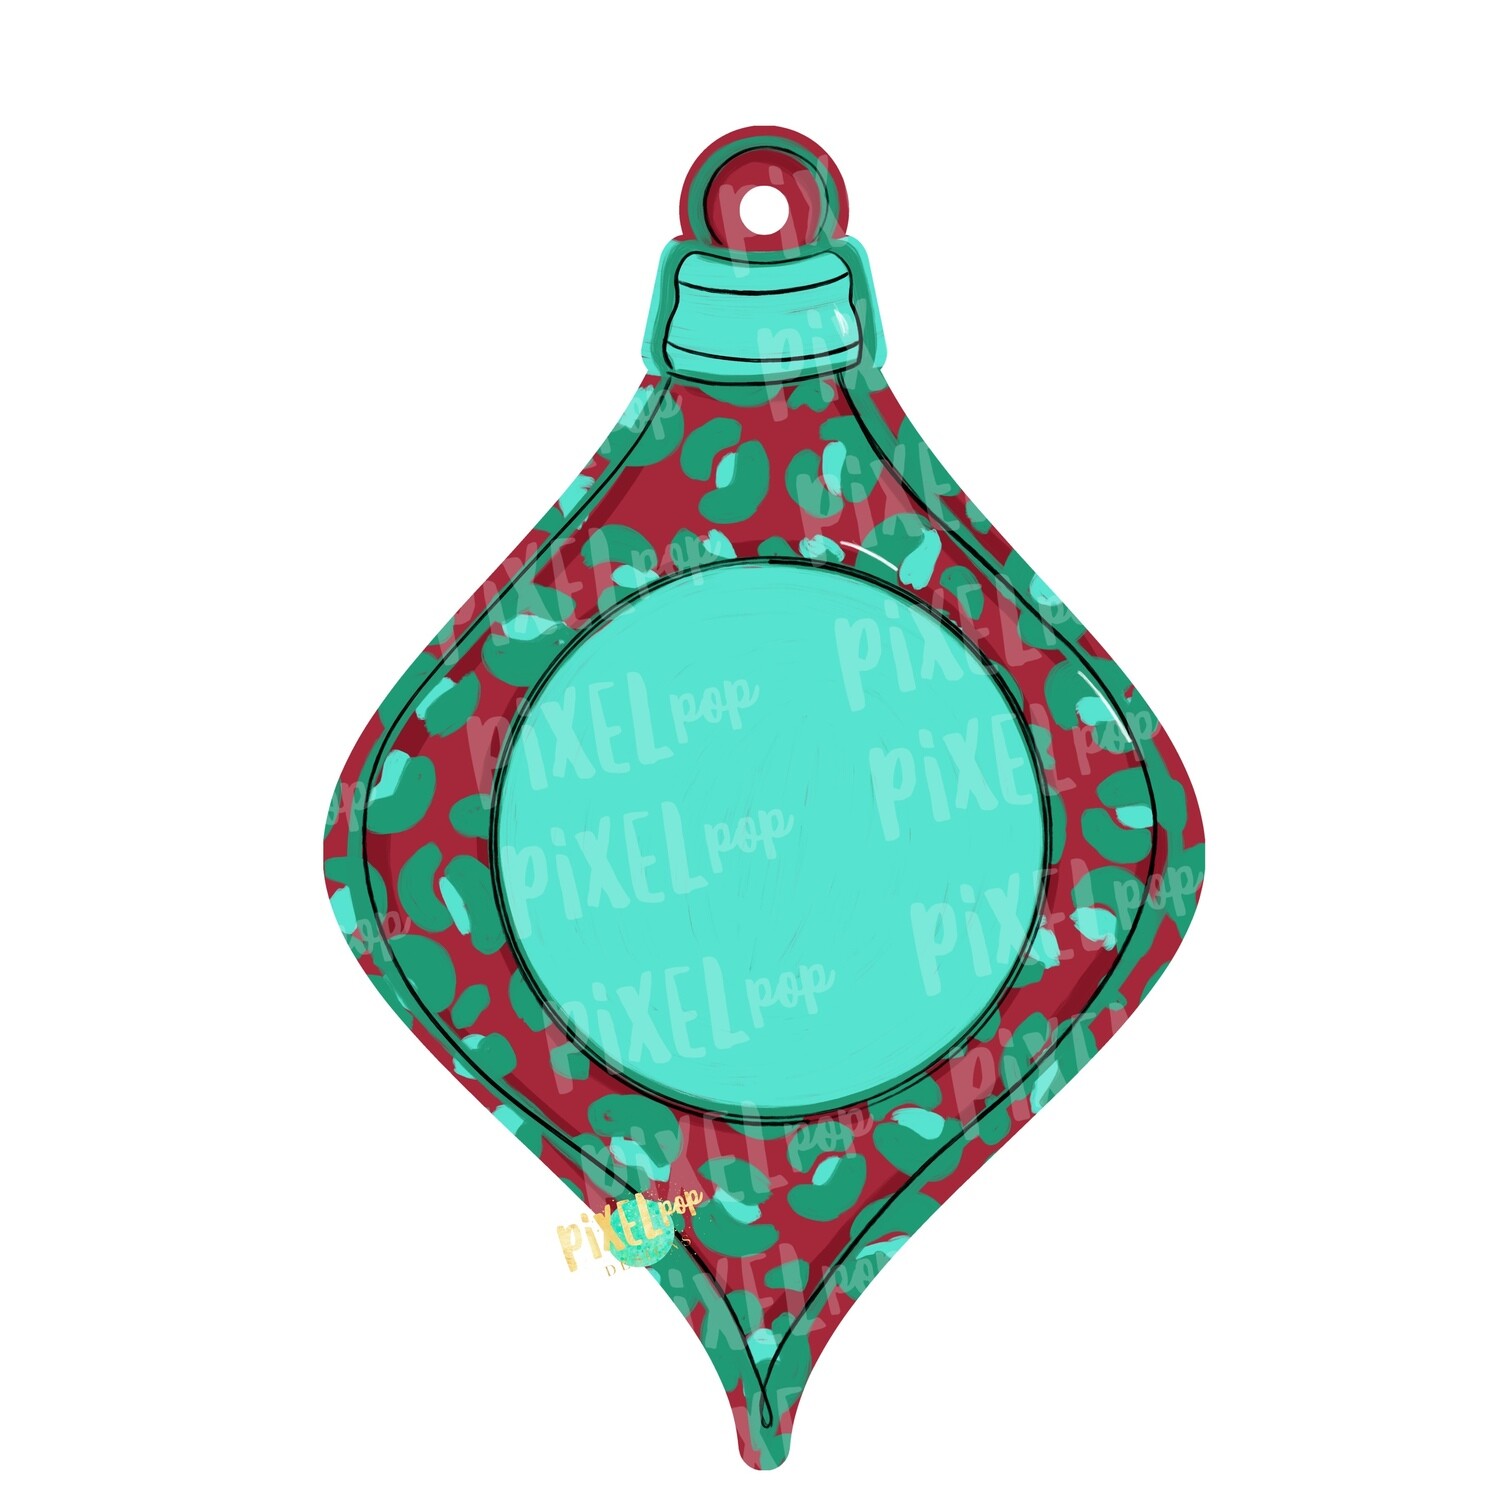 Ornament Leopard Mint Green Red PNG | Sublimation Design | Ornament Design | Printable | Digital Download | Hand Painted Digital Art